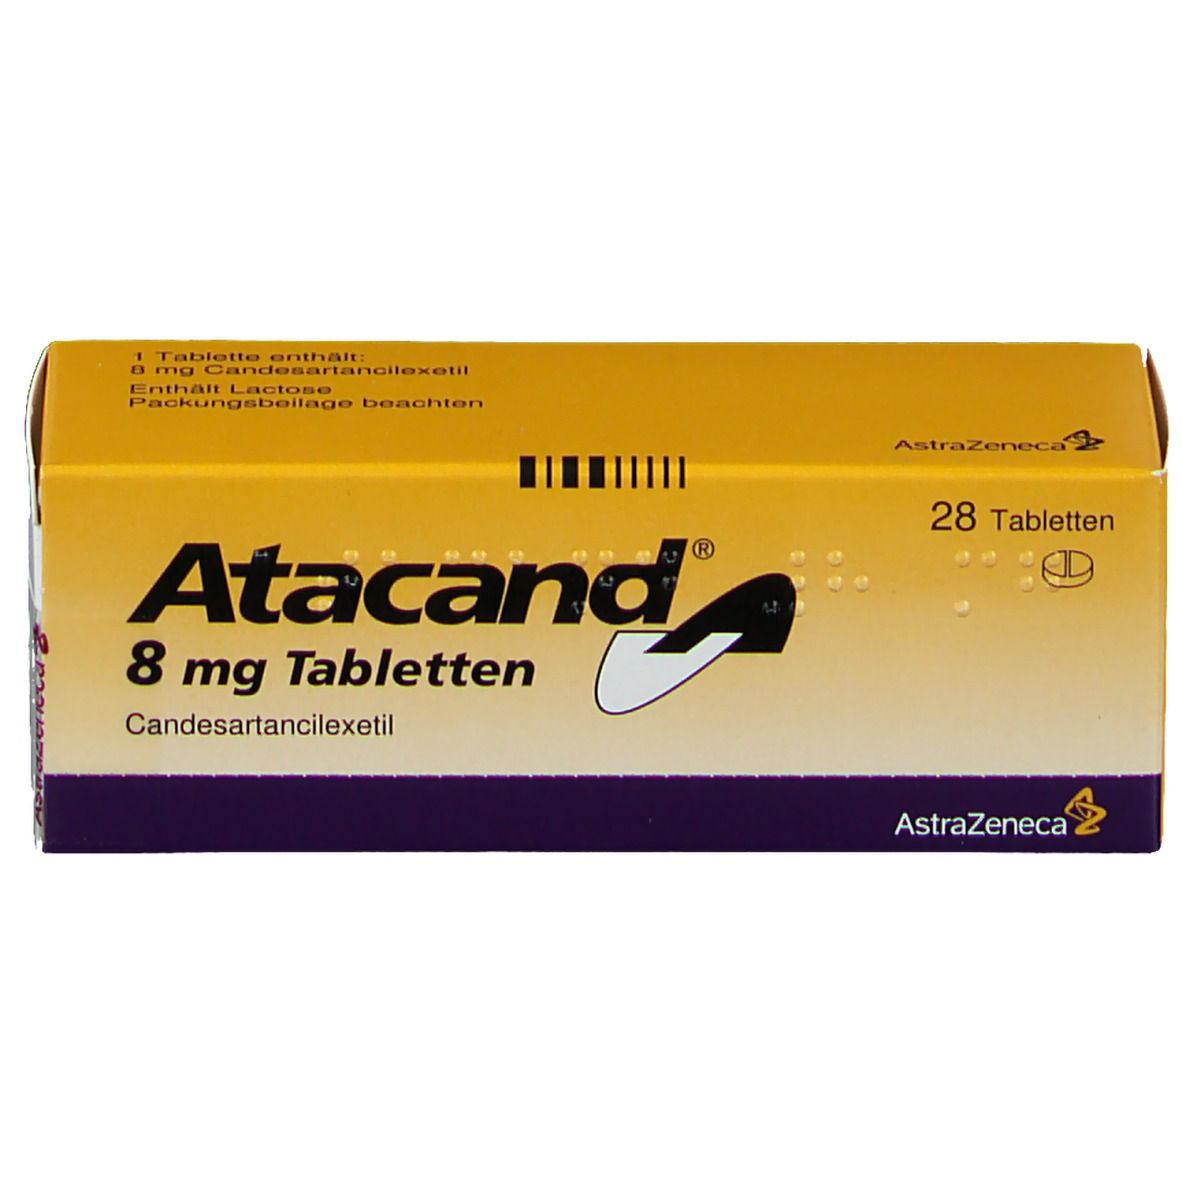 Atacand® 8 mg